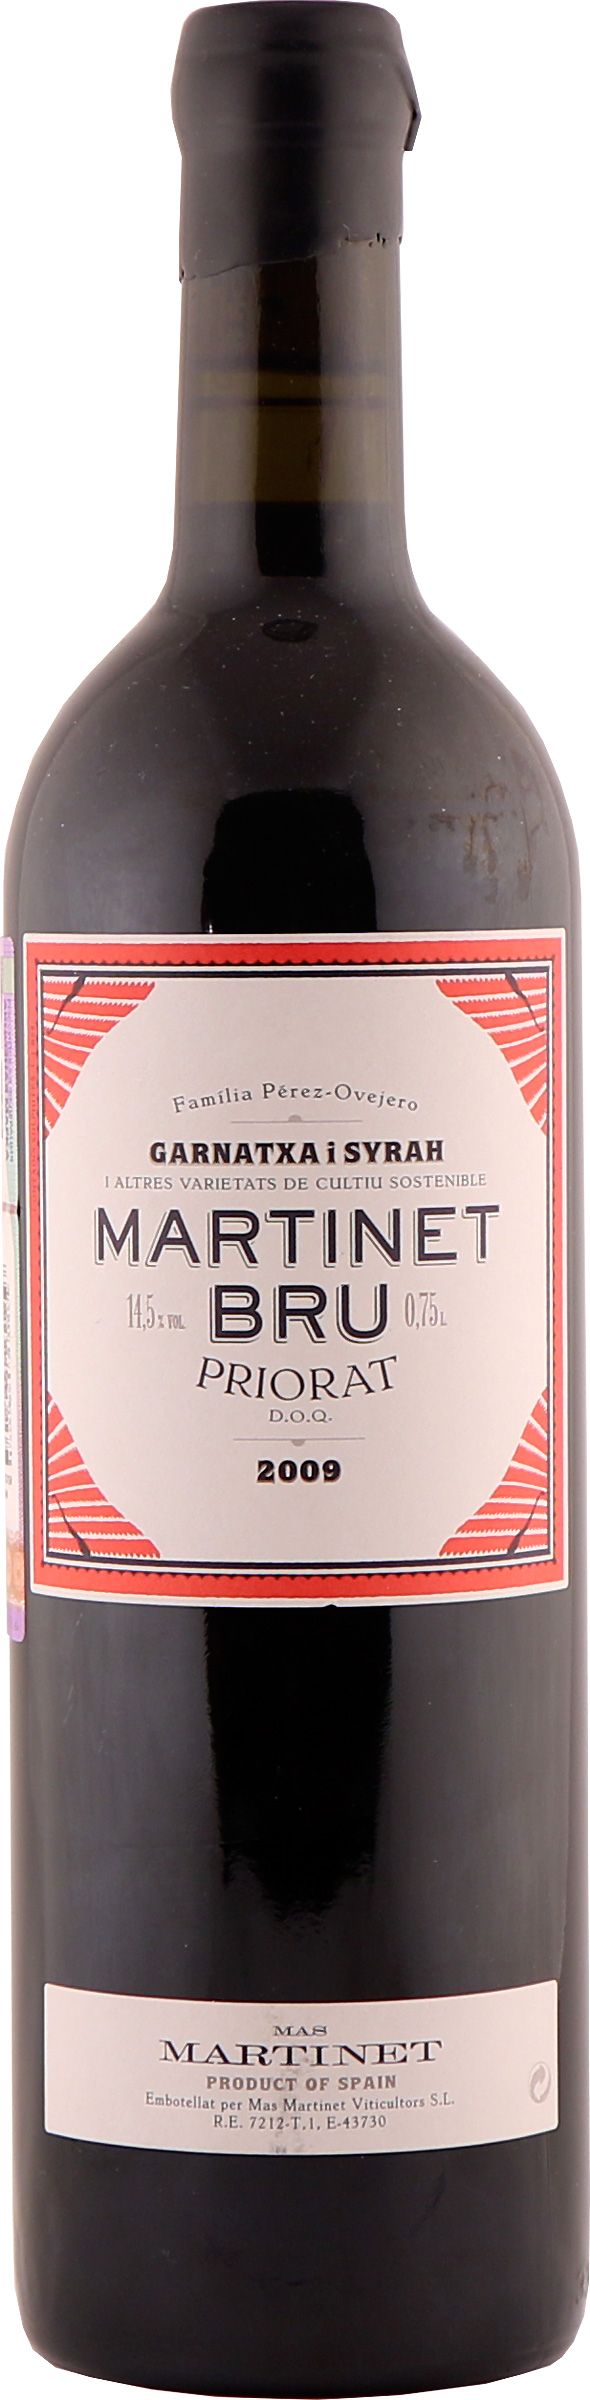 Mas Martinet, Martinet Bru, 2009